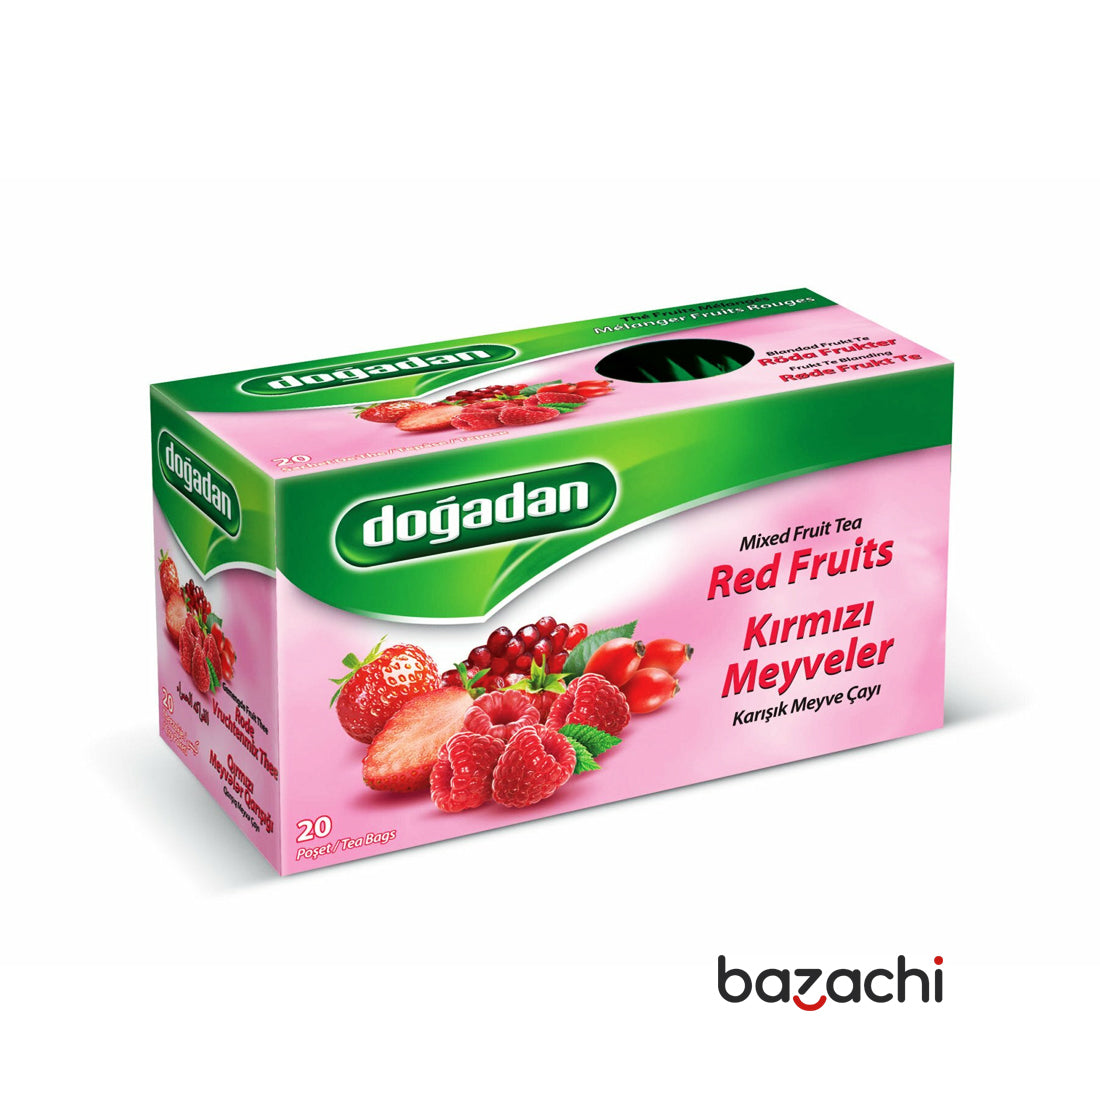 Dogadan Red Fruits Tea Kirmizi Meyveler Cayi 20 Tea Bags